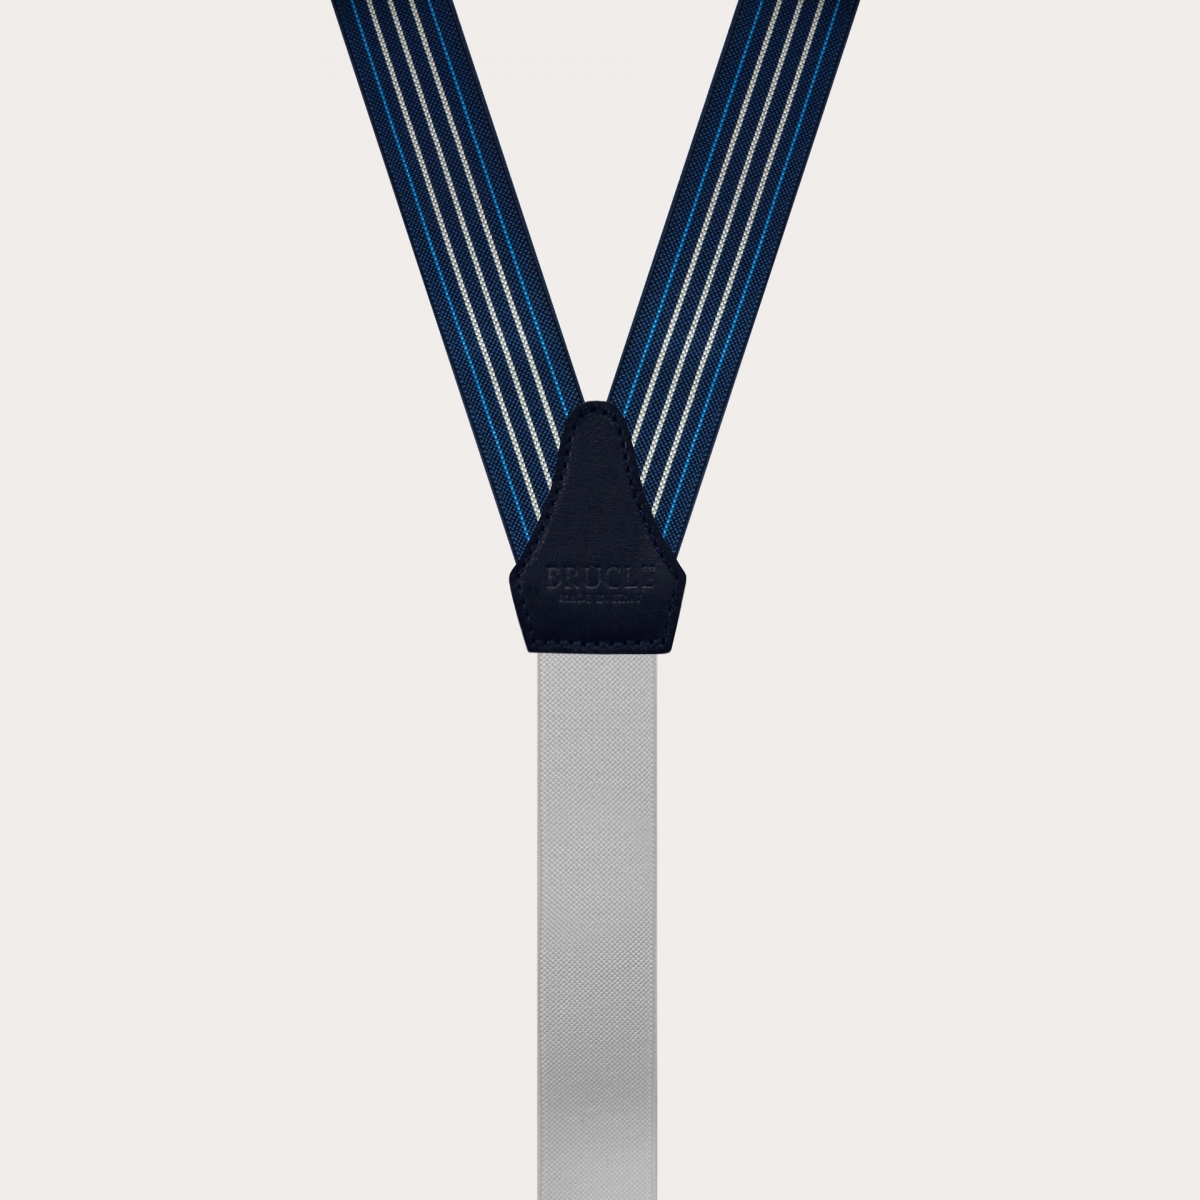 BRUCLE Elegante dünne blaue nickelfreie Hosenträger mit kontrastierenden Linien